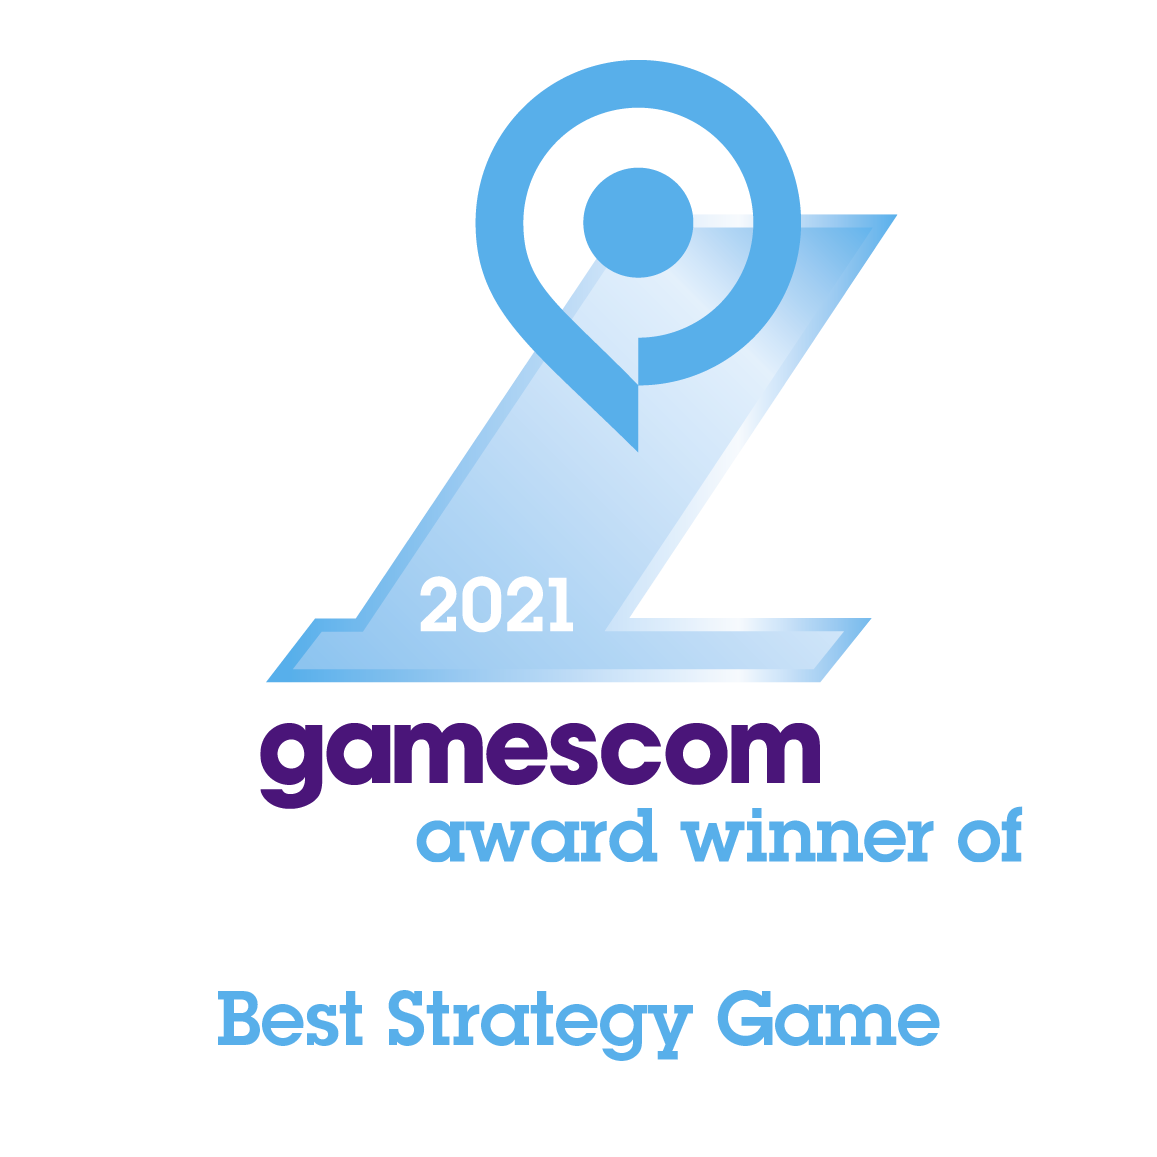 gamescom_2021_winnerlogo_Best_Strategy_Game.png